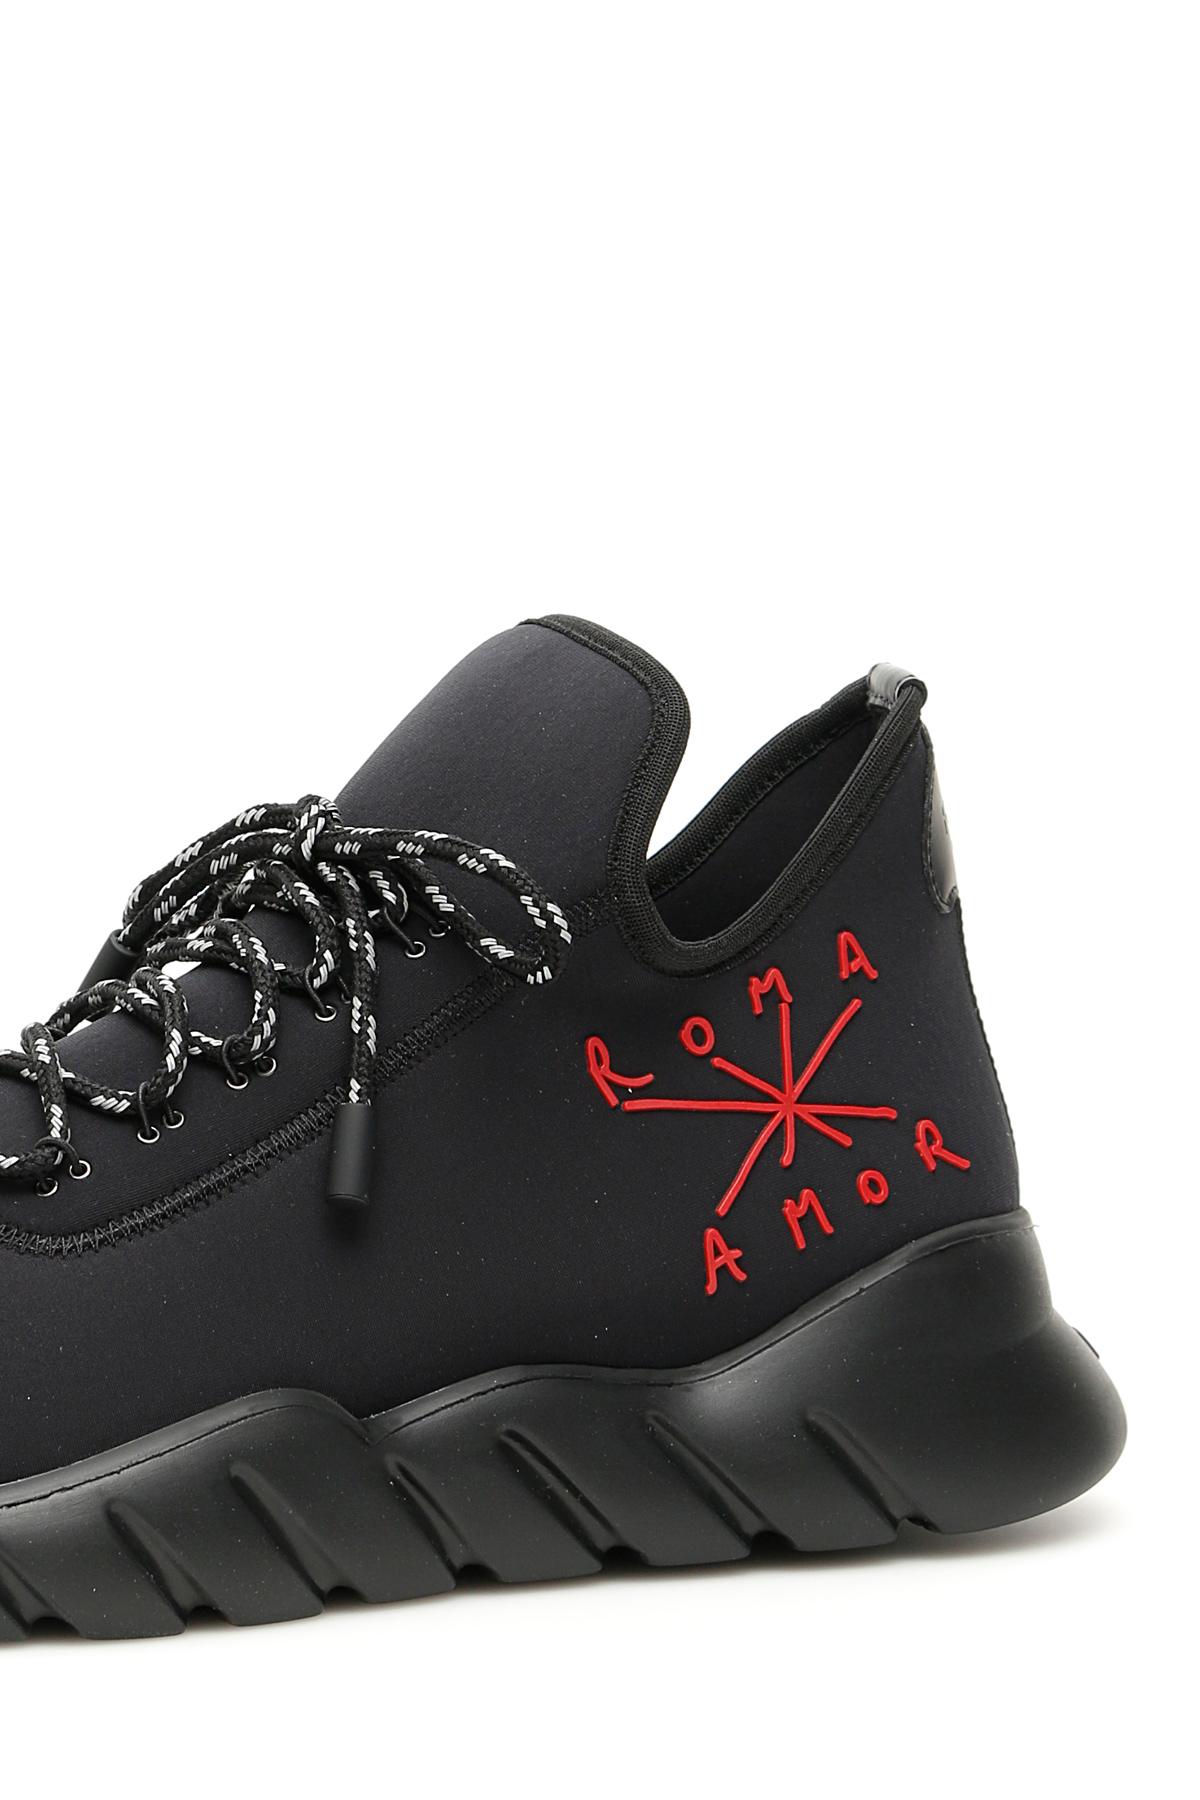 Fendi Leather -fiend Roma-amor Sneakers 